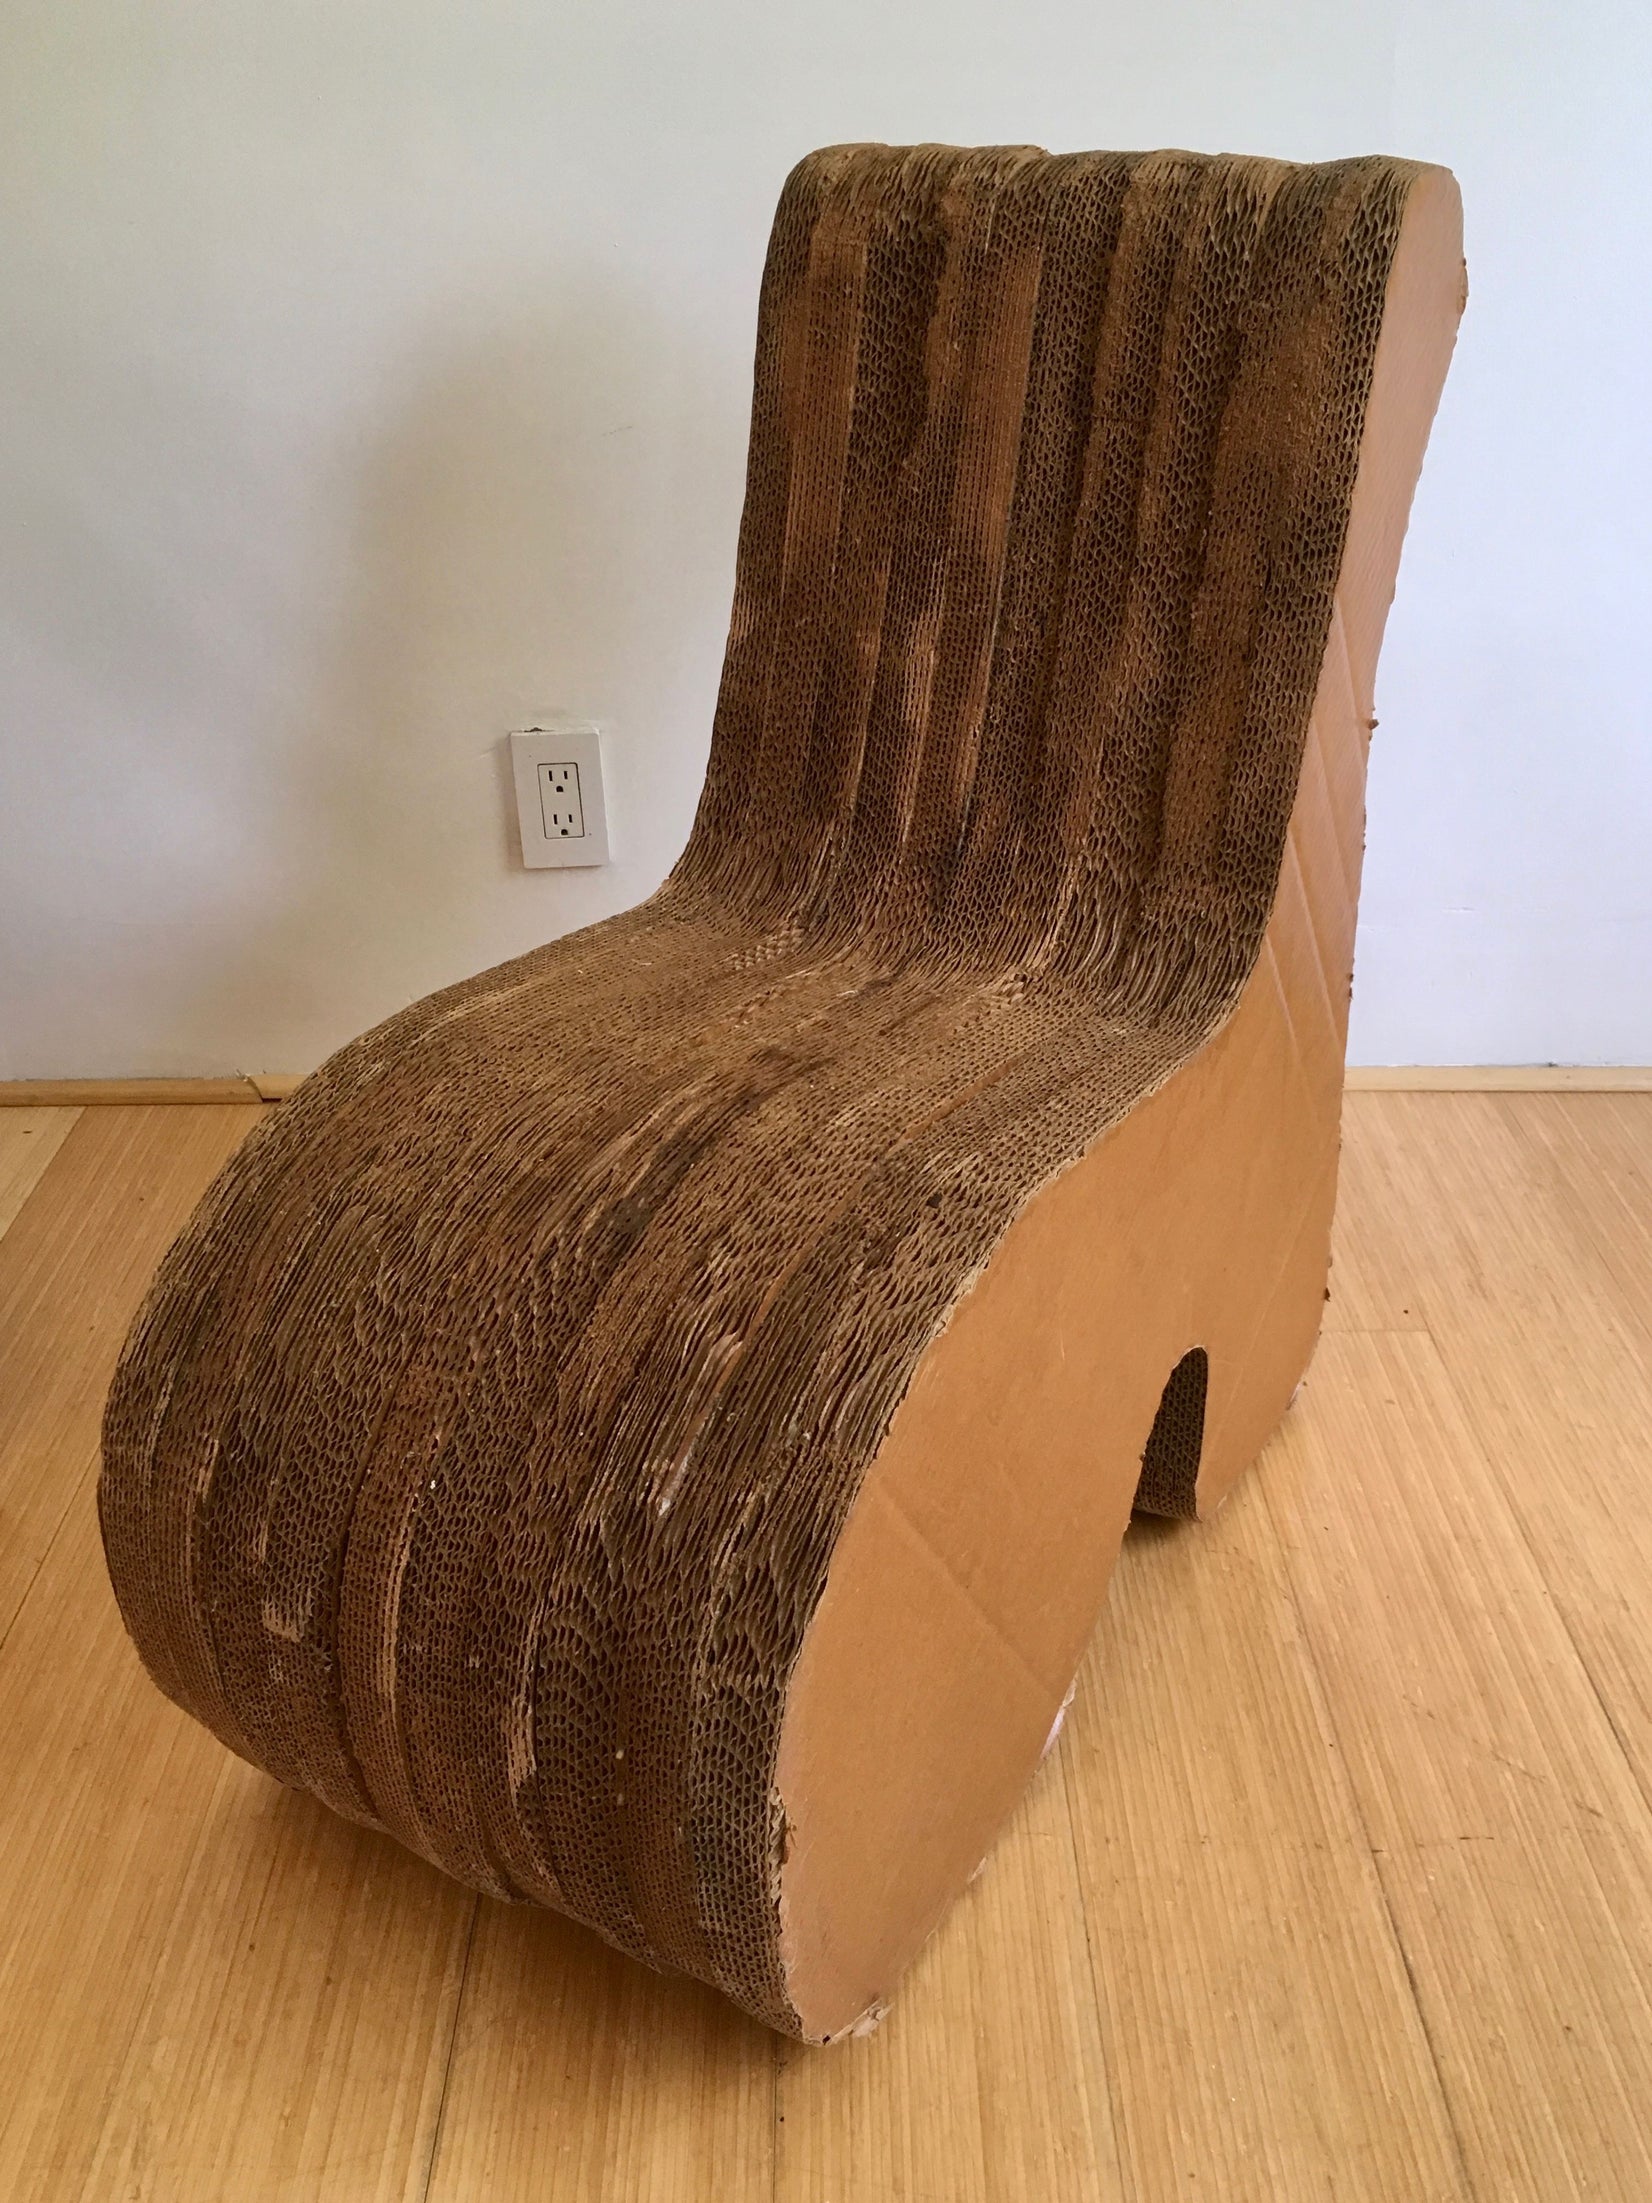 Sculptural Cardboard Chair, 1960s USA